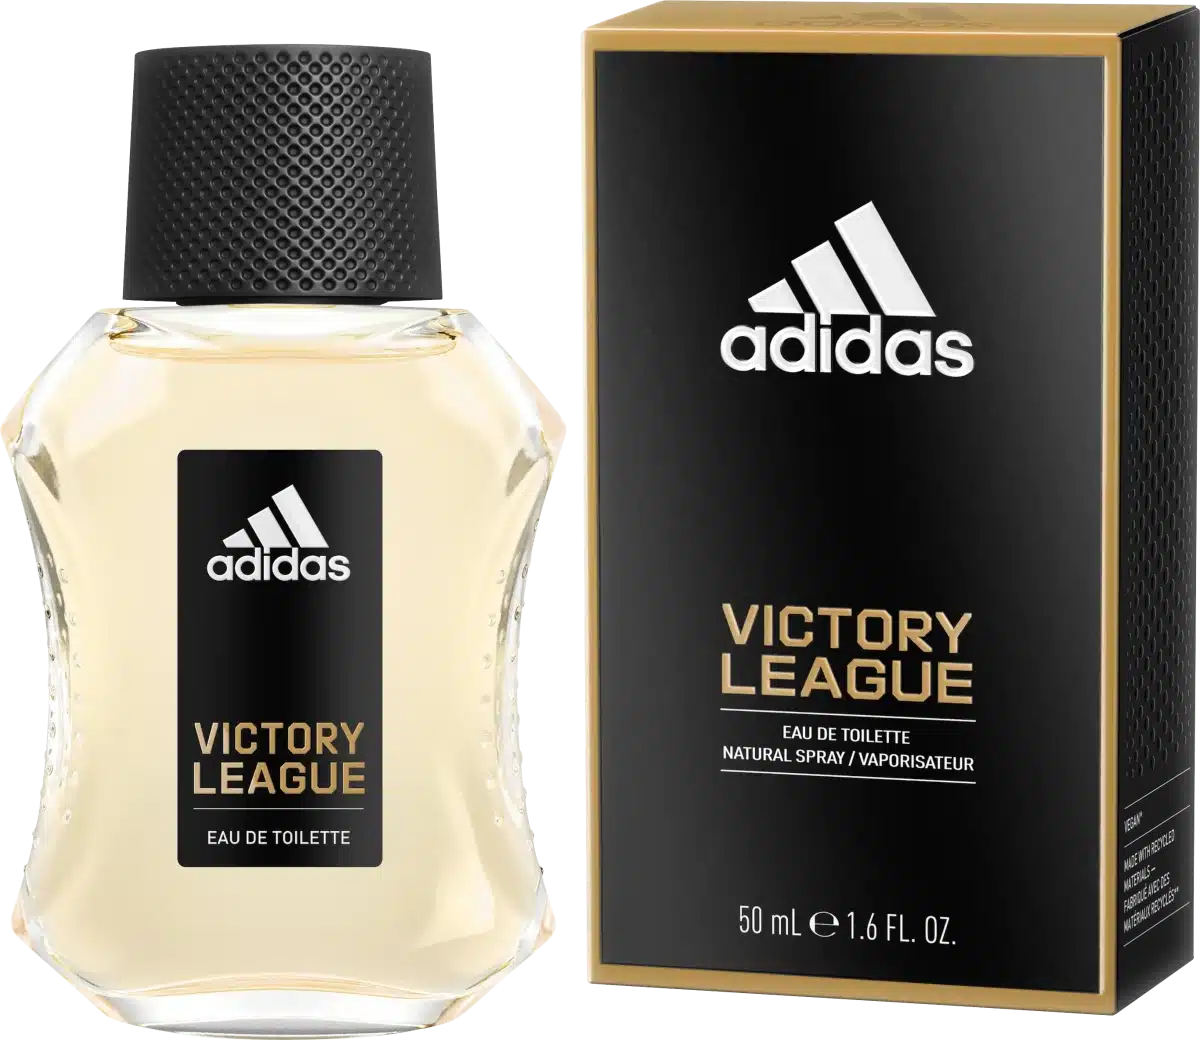 Adidas victory league